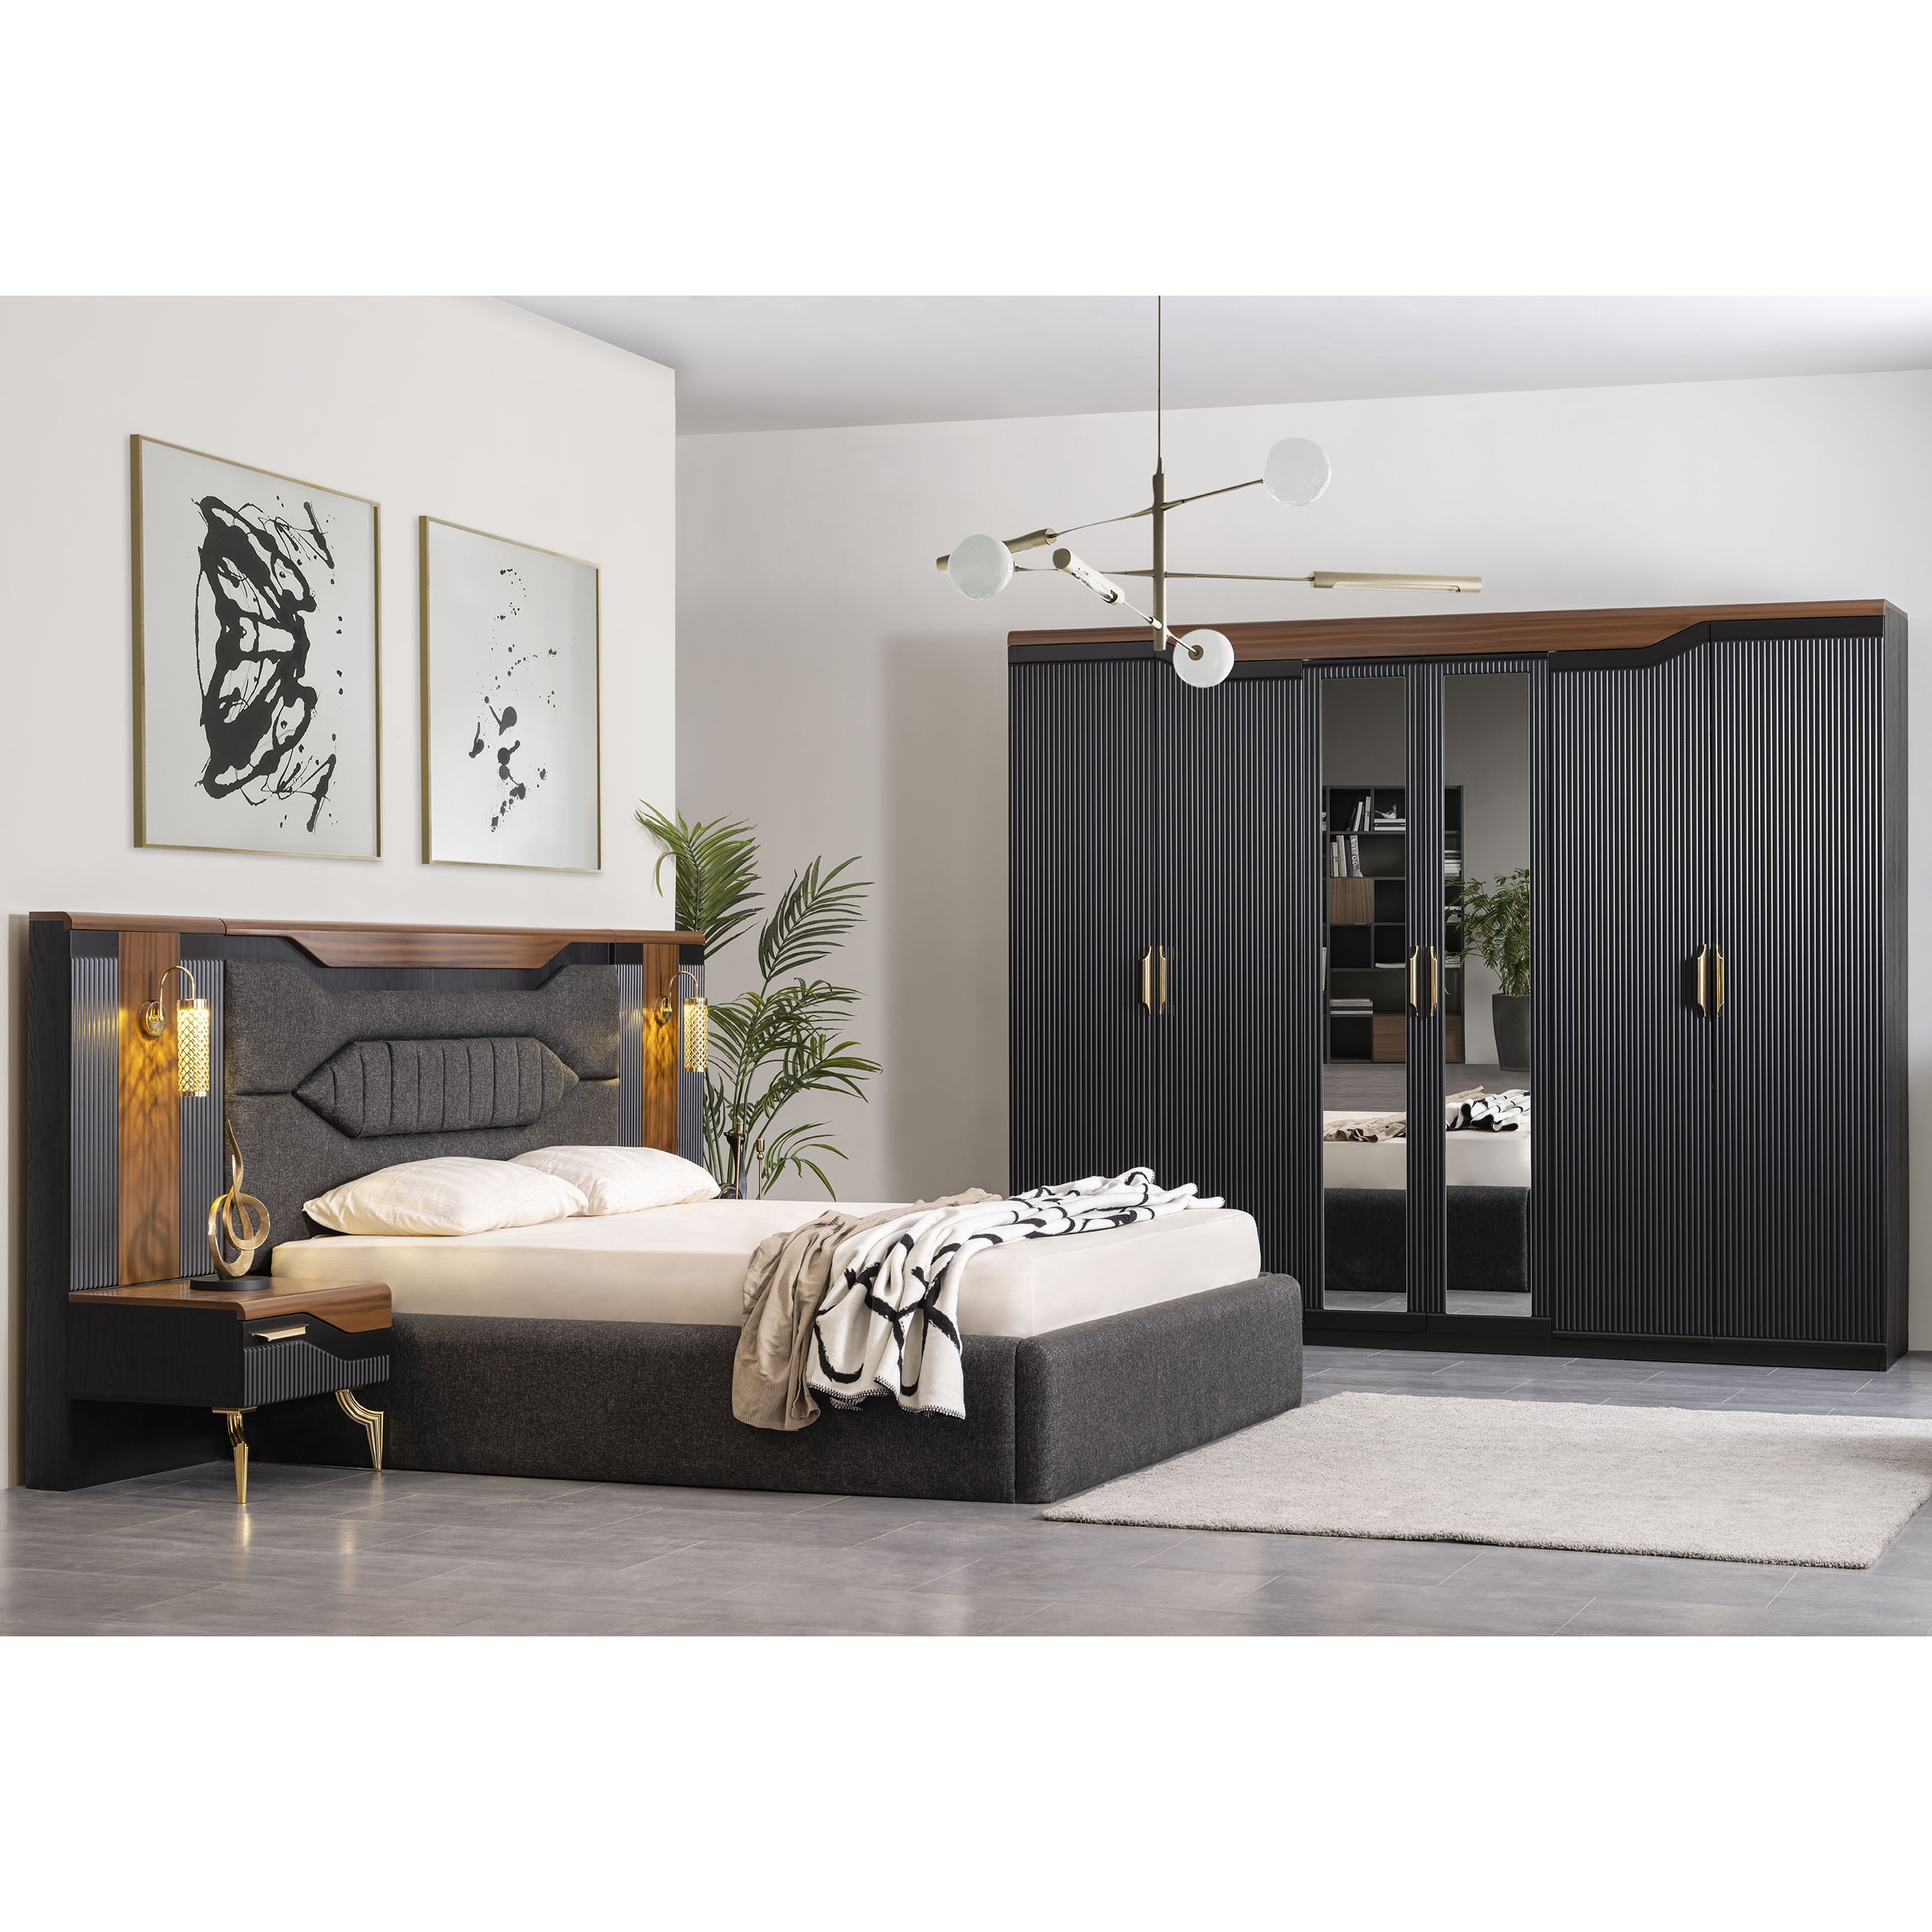 Style Hermes Vol2 Bedroom (Bed With Storage 160x200cm)